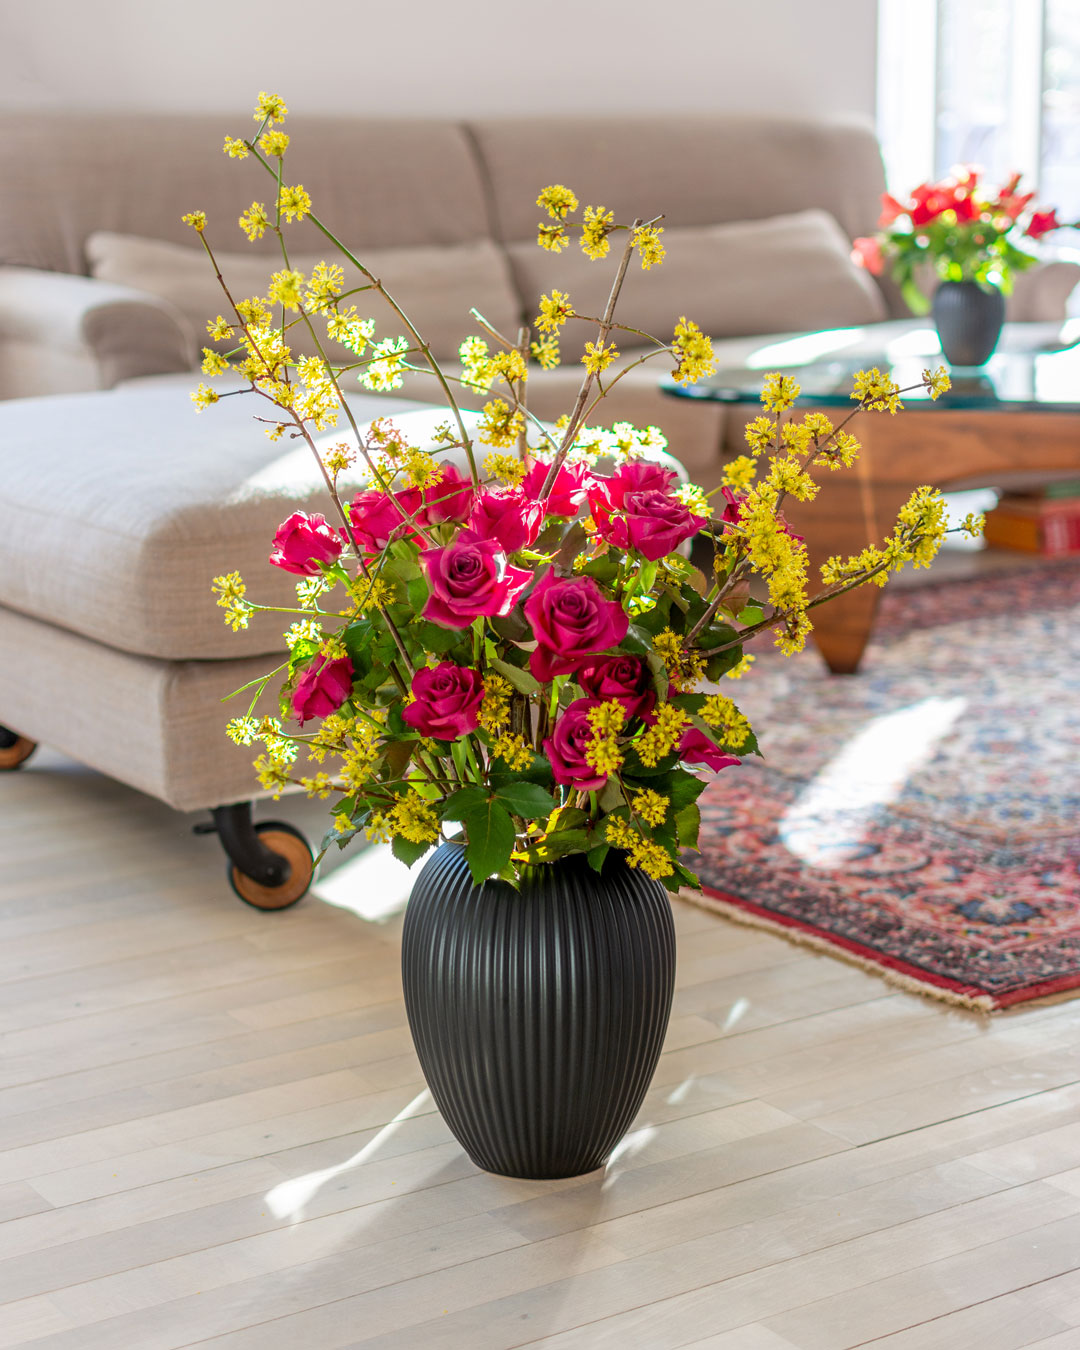 Sort vase fra Michael Andersen Keramik Model 4767 23 cm med ceriserøde roser og kirsebærkornelgrene med gule blomster på stuegulv med sofa i baggrunden